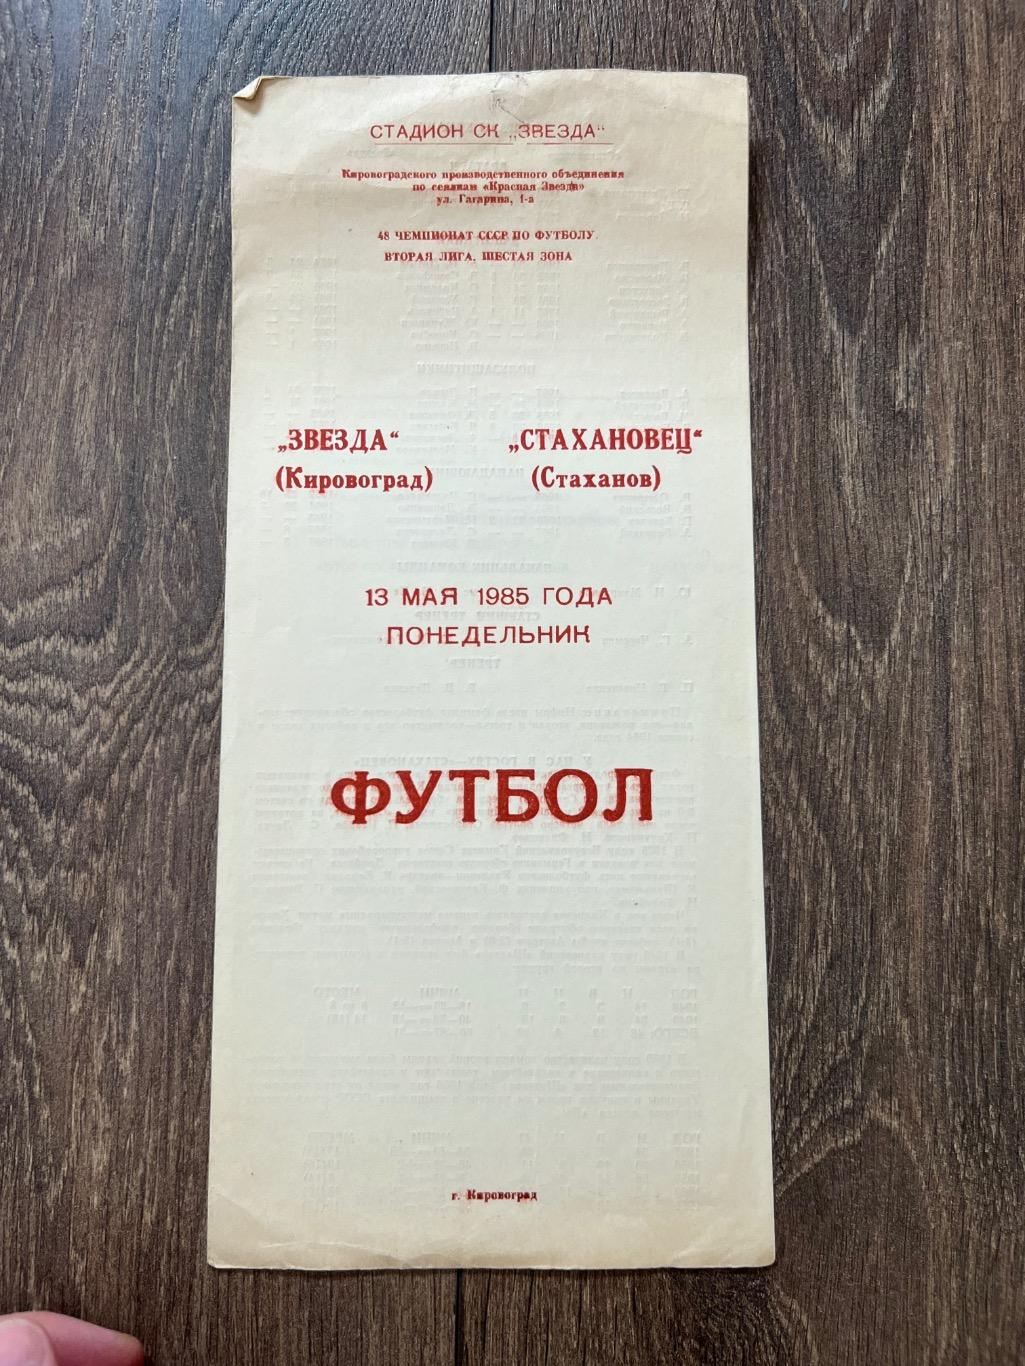 Звезда Кировоград - Стахановец Стаханов 1985